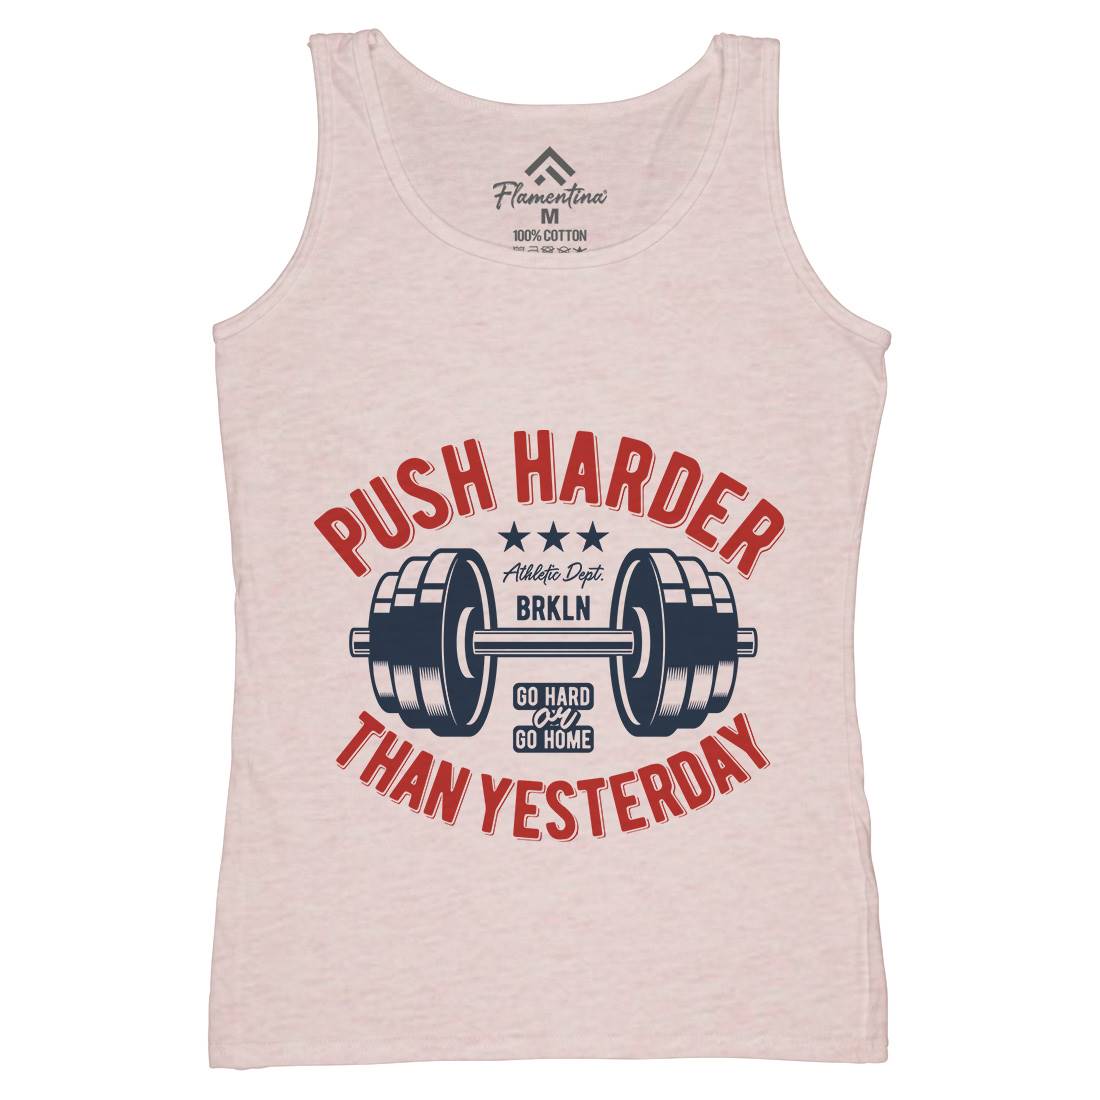 Push Harder Womens Organic Tank Top Vest Gym B301